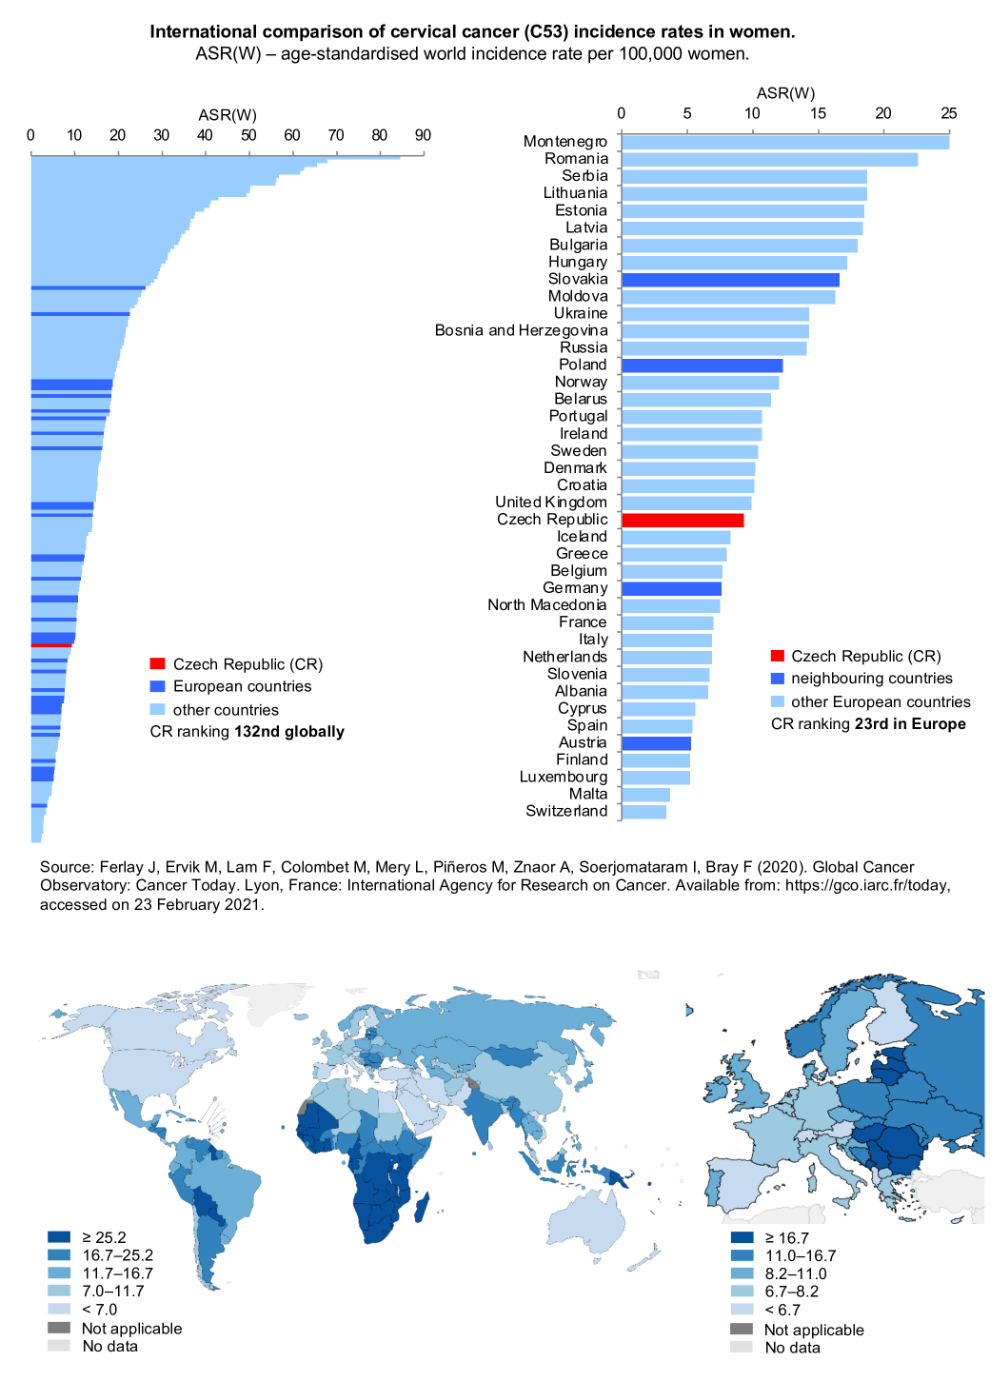 Figure 1: International comparison of cervical cancer (C53) incidence rates. ASR(W) – age-standardised world incidence rate per 100,000 women. Source: GLOBOCAN 2020 [1].